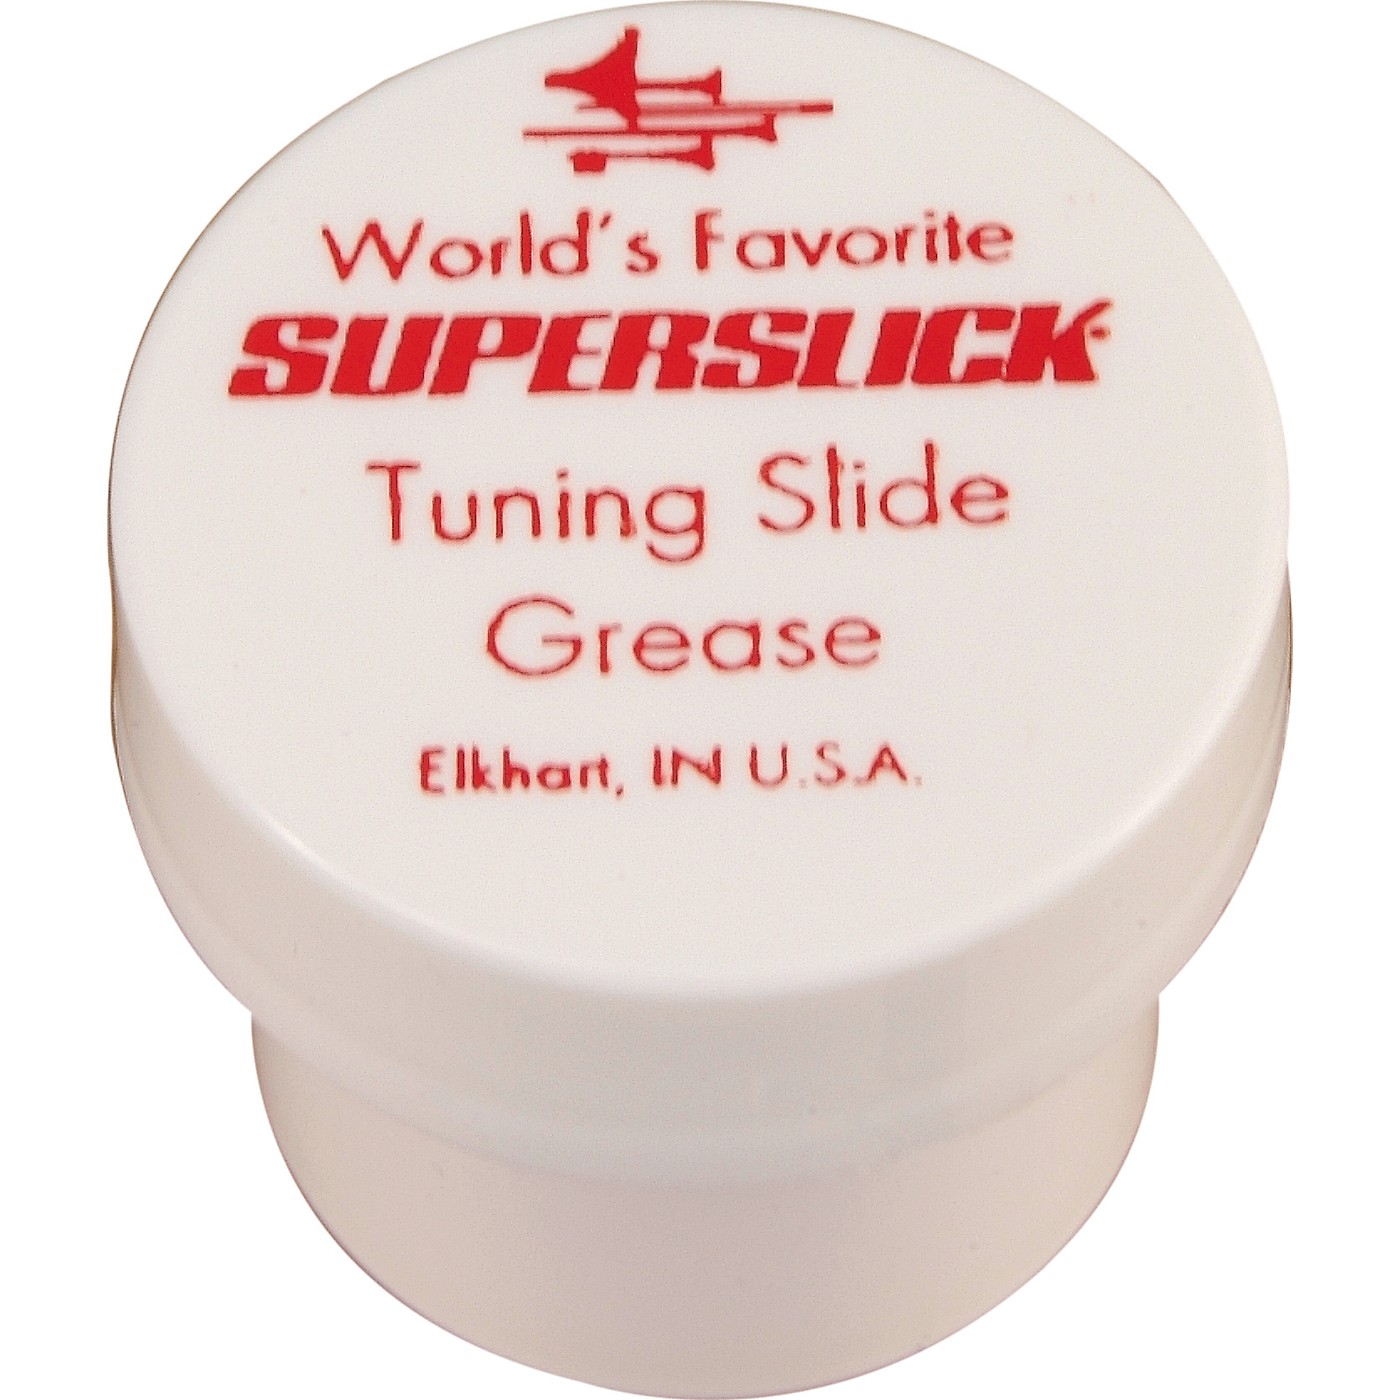 Superslick Tuning Slide Grease thumbnail